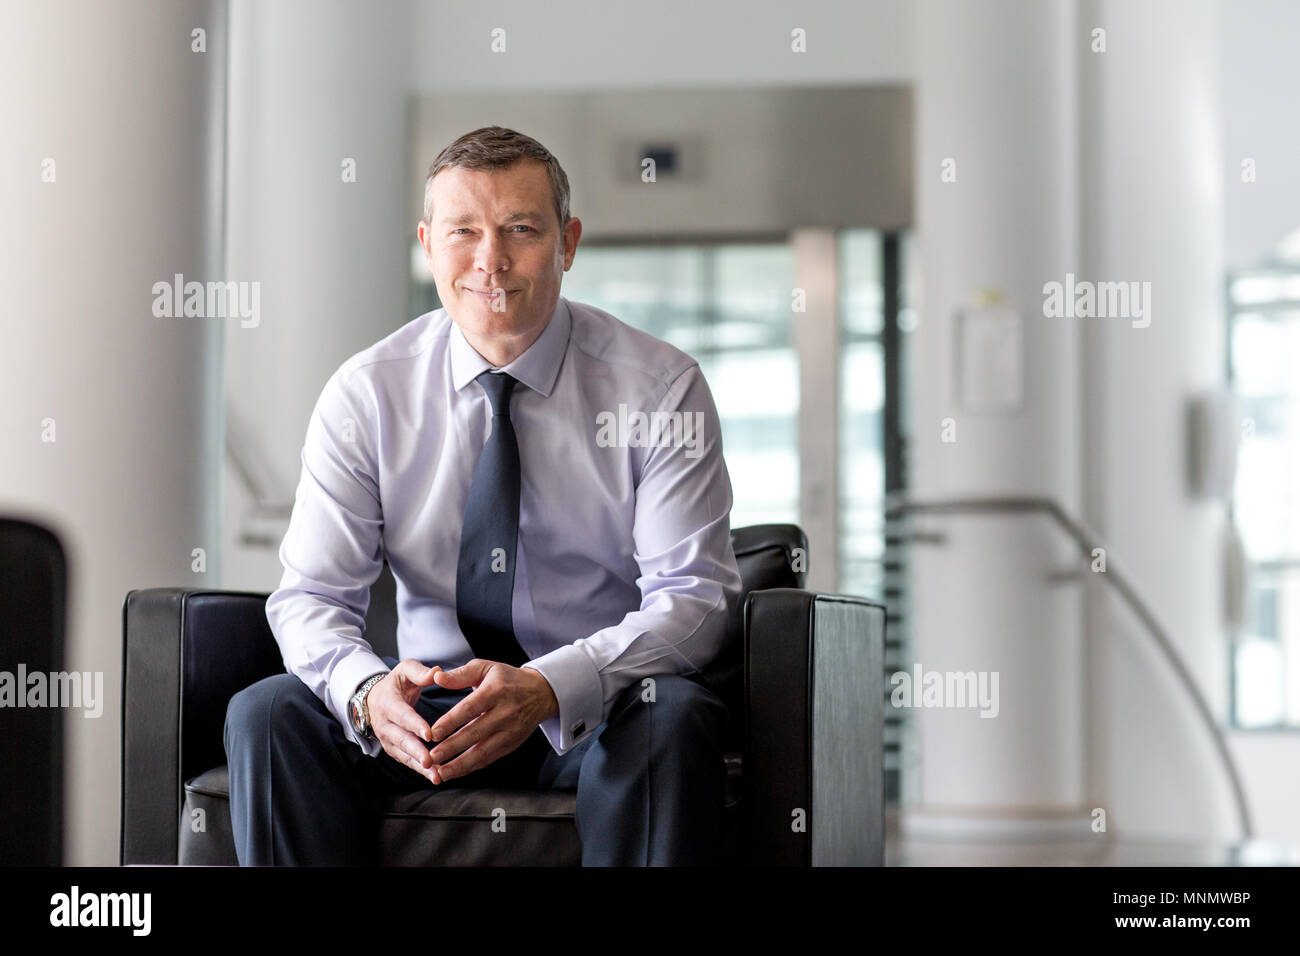 Portrait of senior business executive Stock Photo